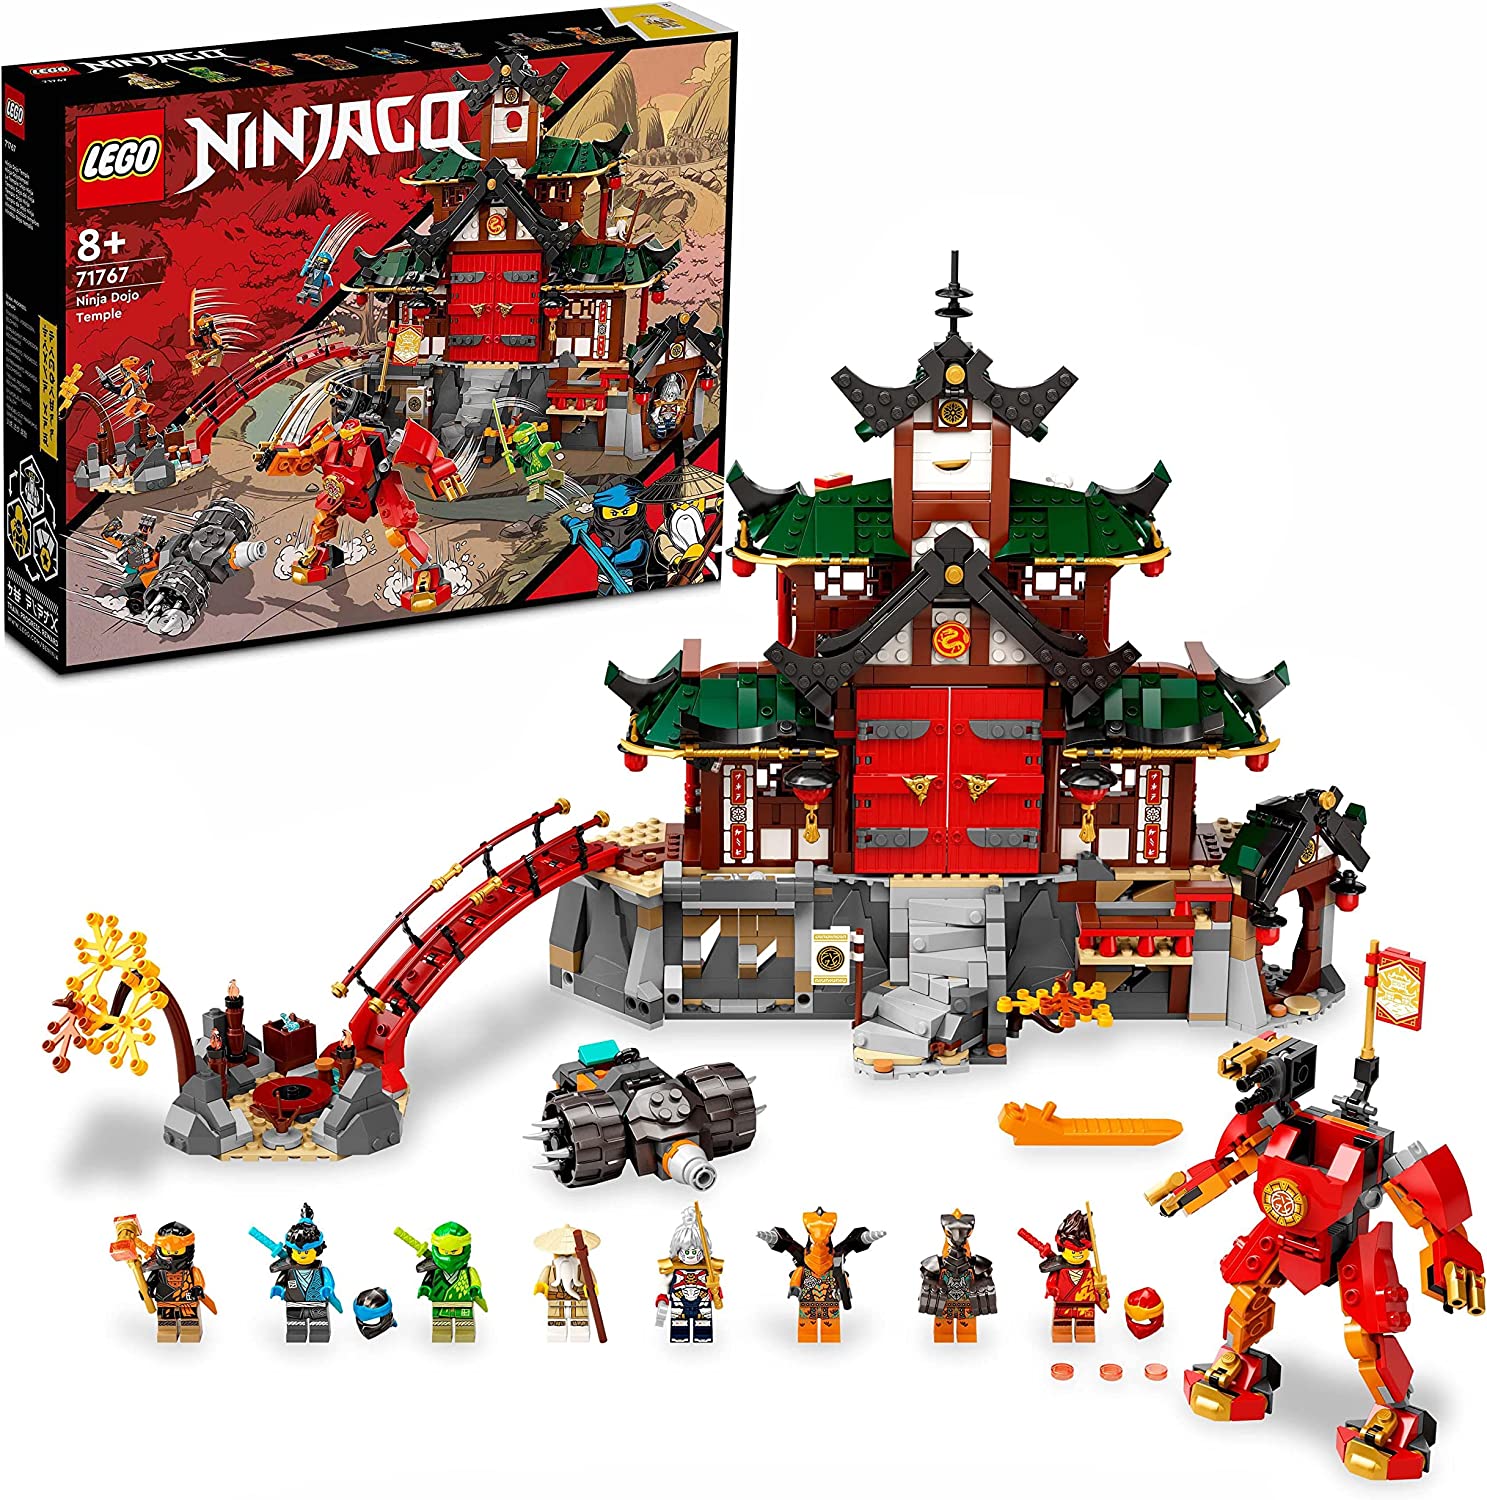 LEGO 71767 NINJAGO Ninja Doji Temple Master of Spinjitzu, Building Set with Lloyd, Kai and Snake Action Figures, Toys from 8 Years